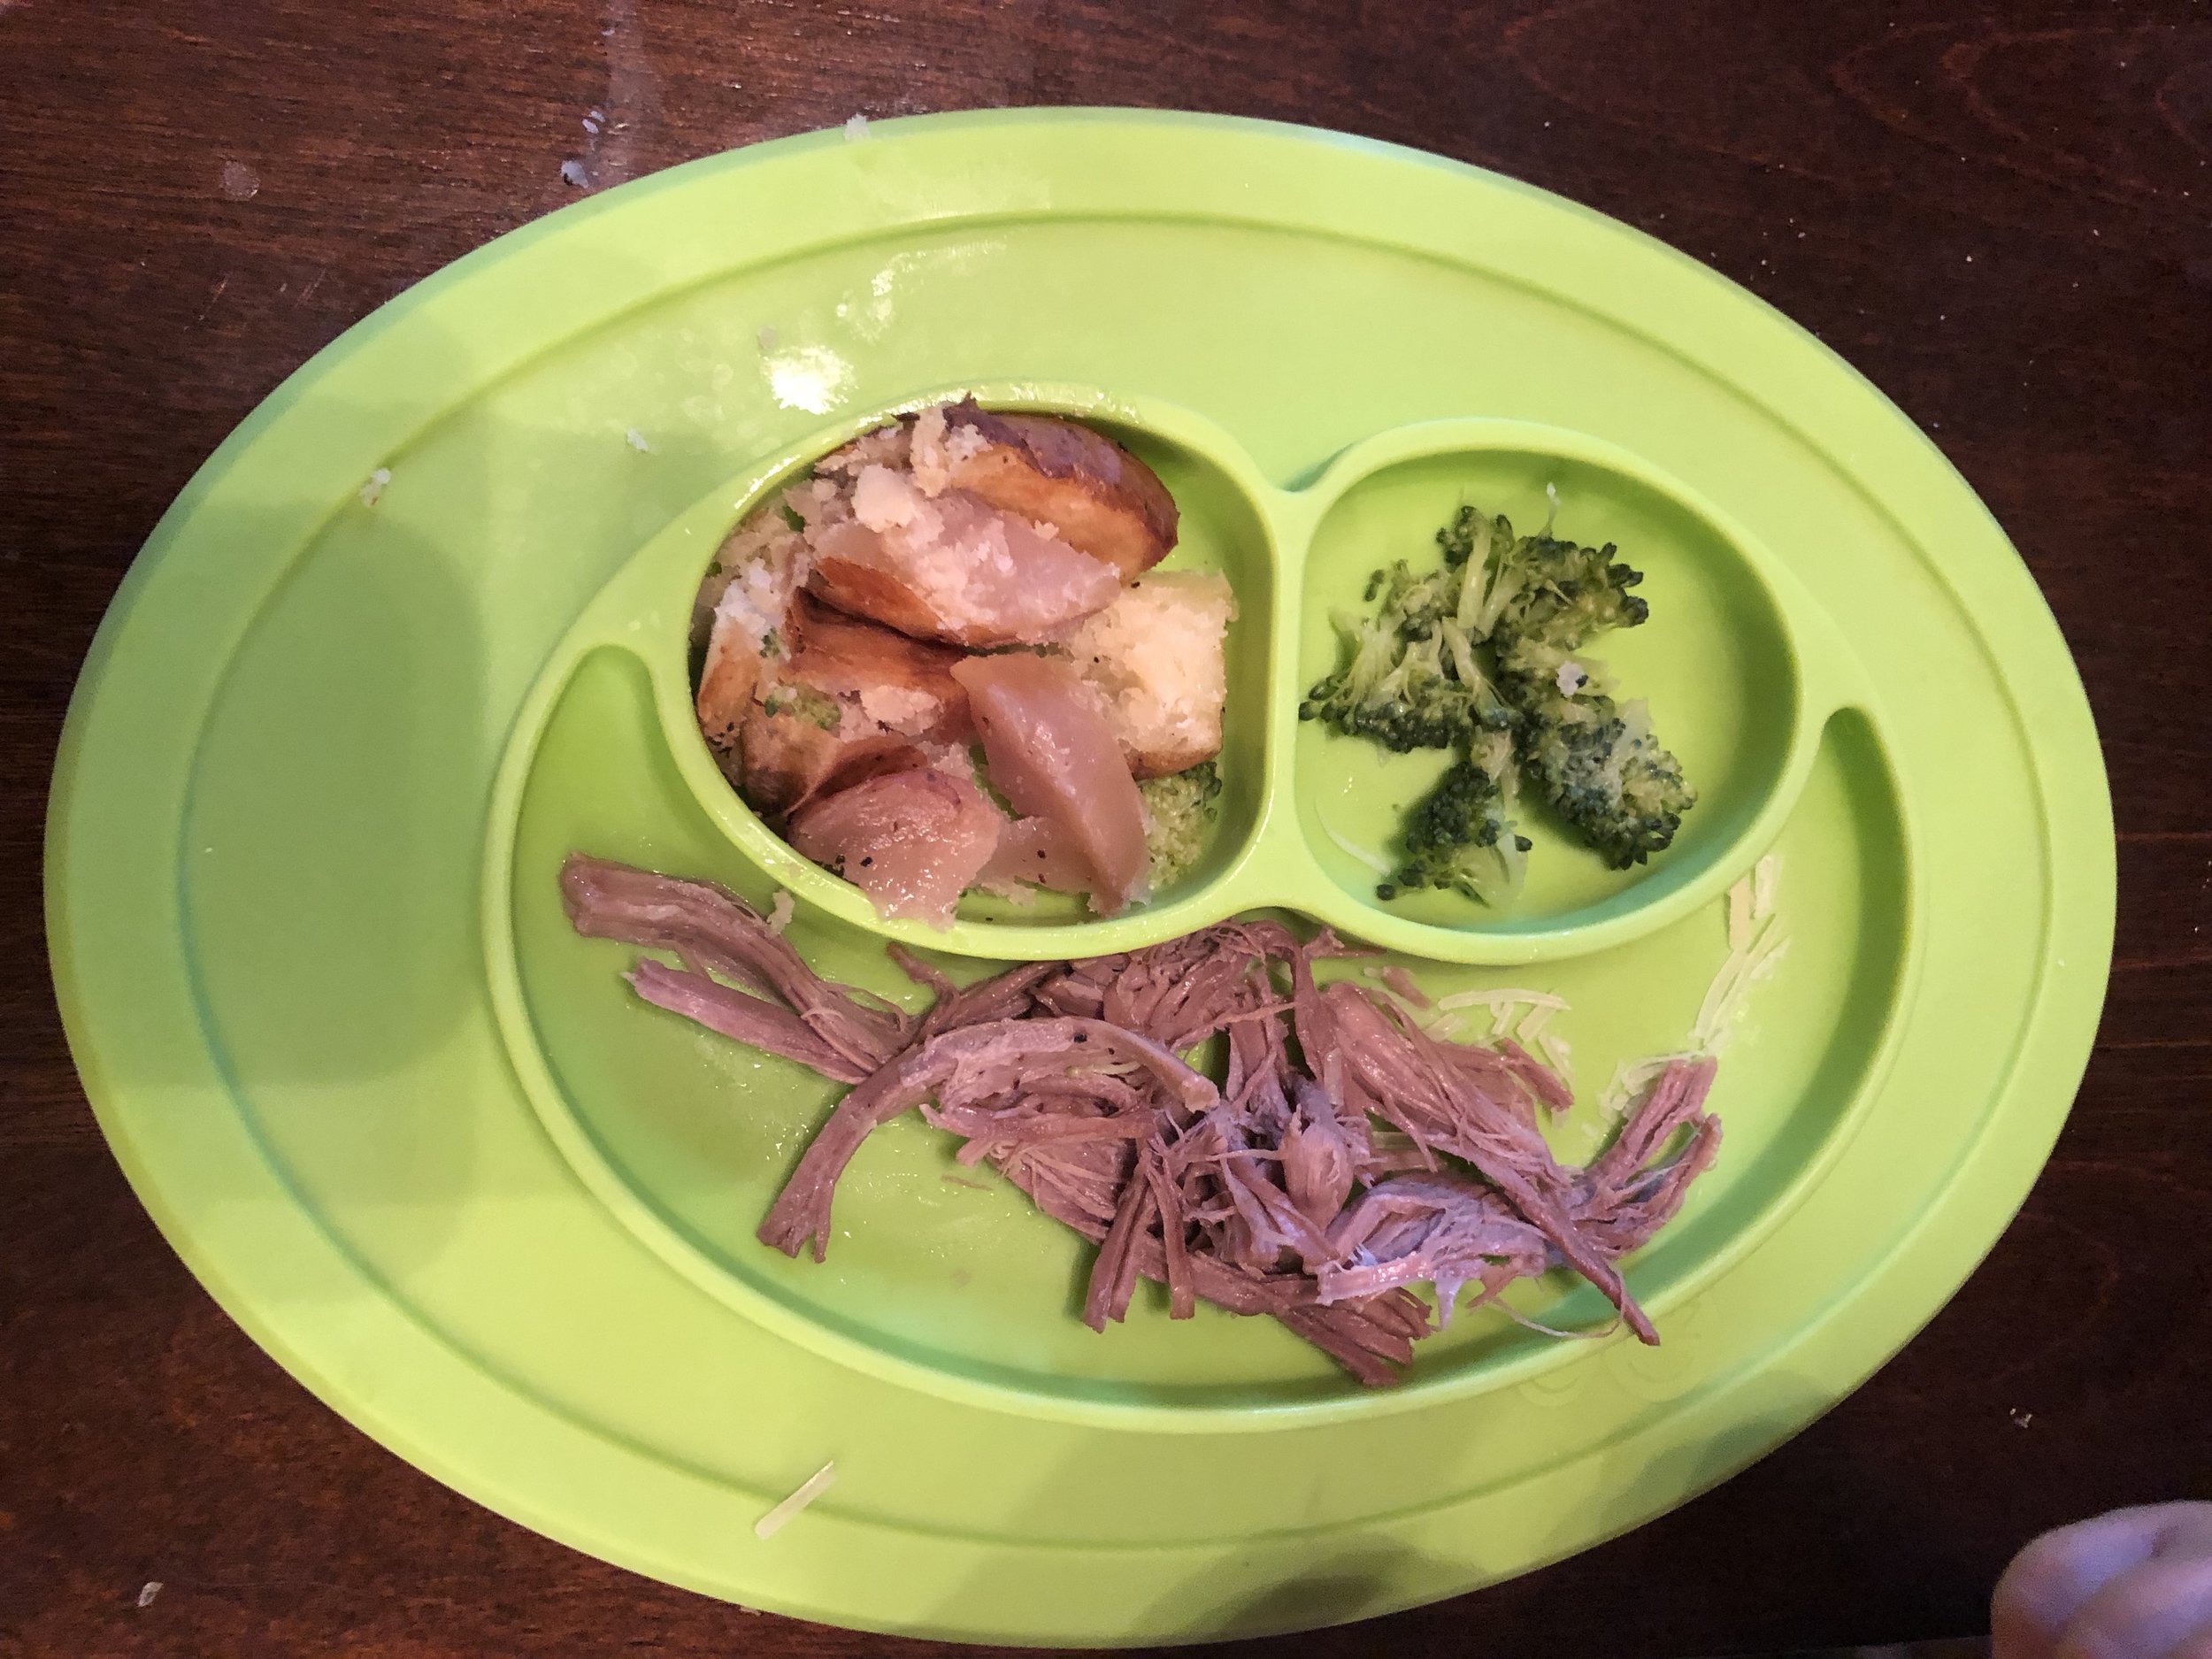 pot roast, potatoes and broccoli